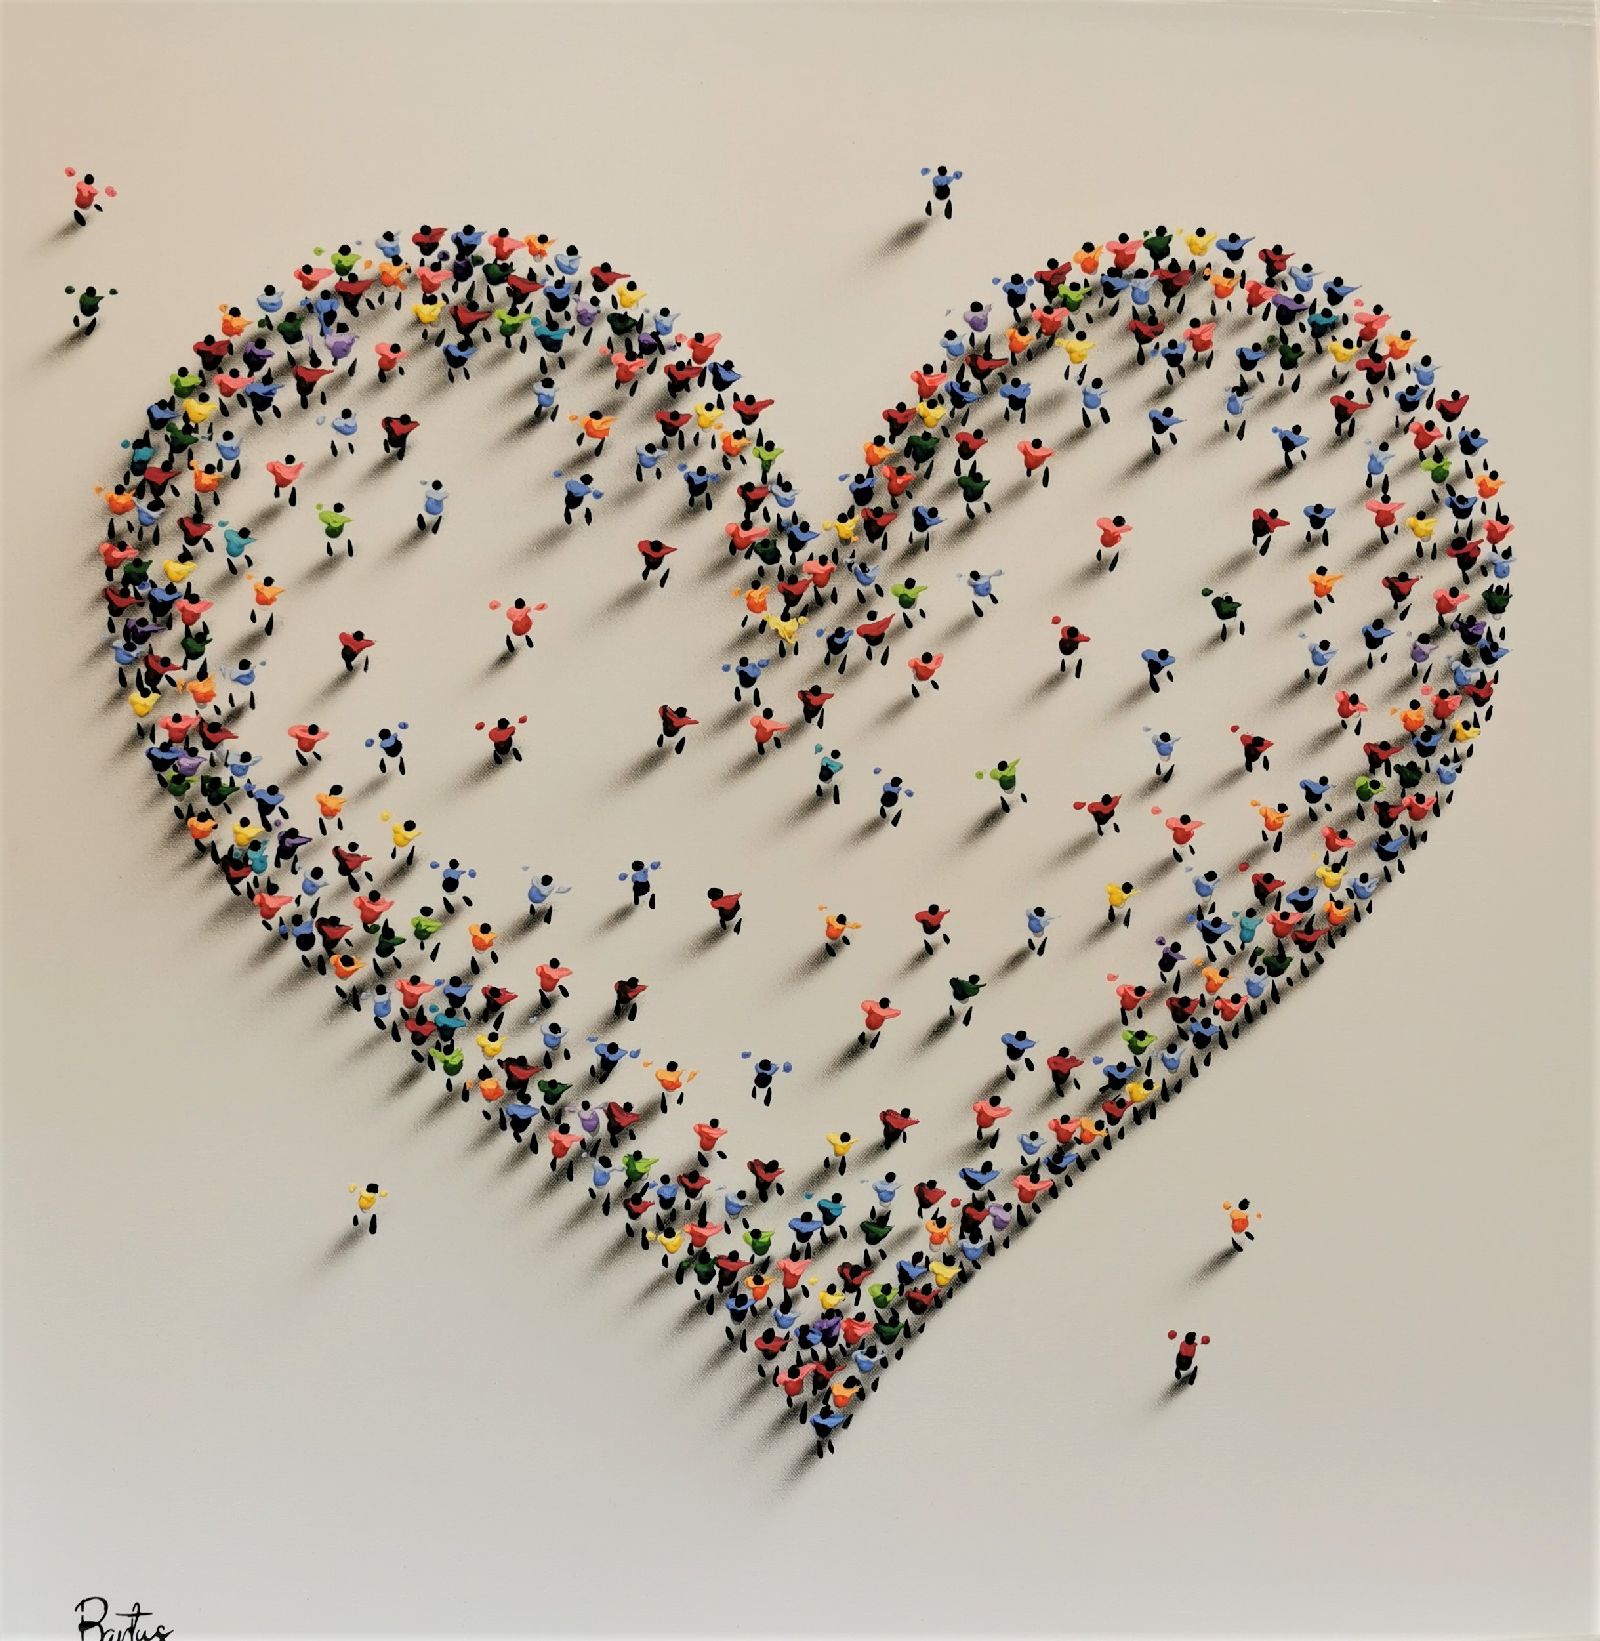 Heartbeat by Francisco Bartus